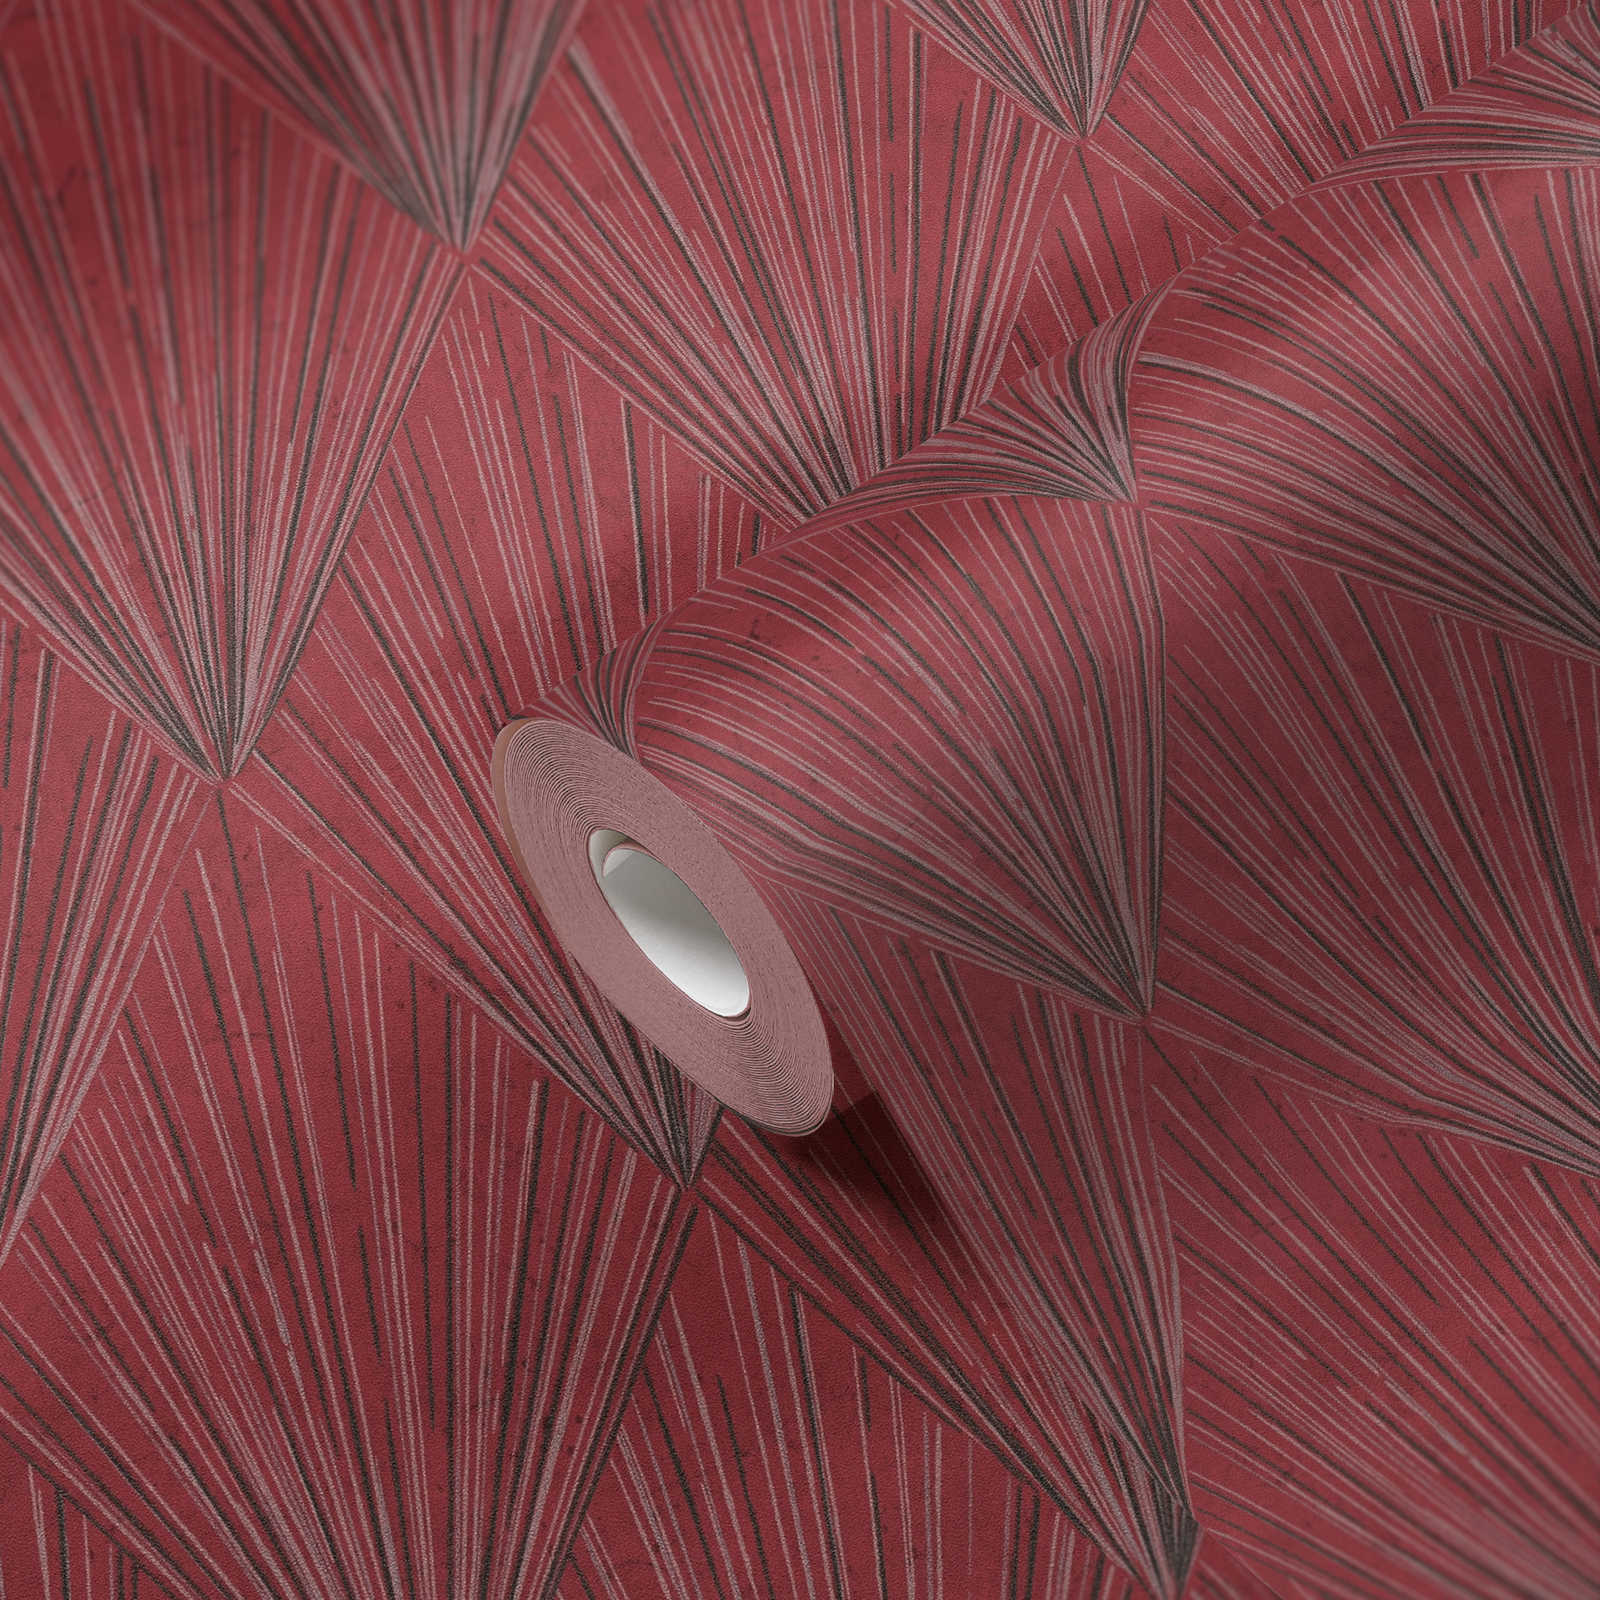             Wallpaper with modern art deco pattern & metallic effect - metallic, red, black
        